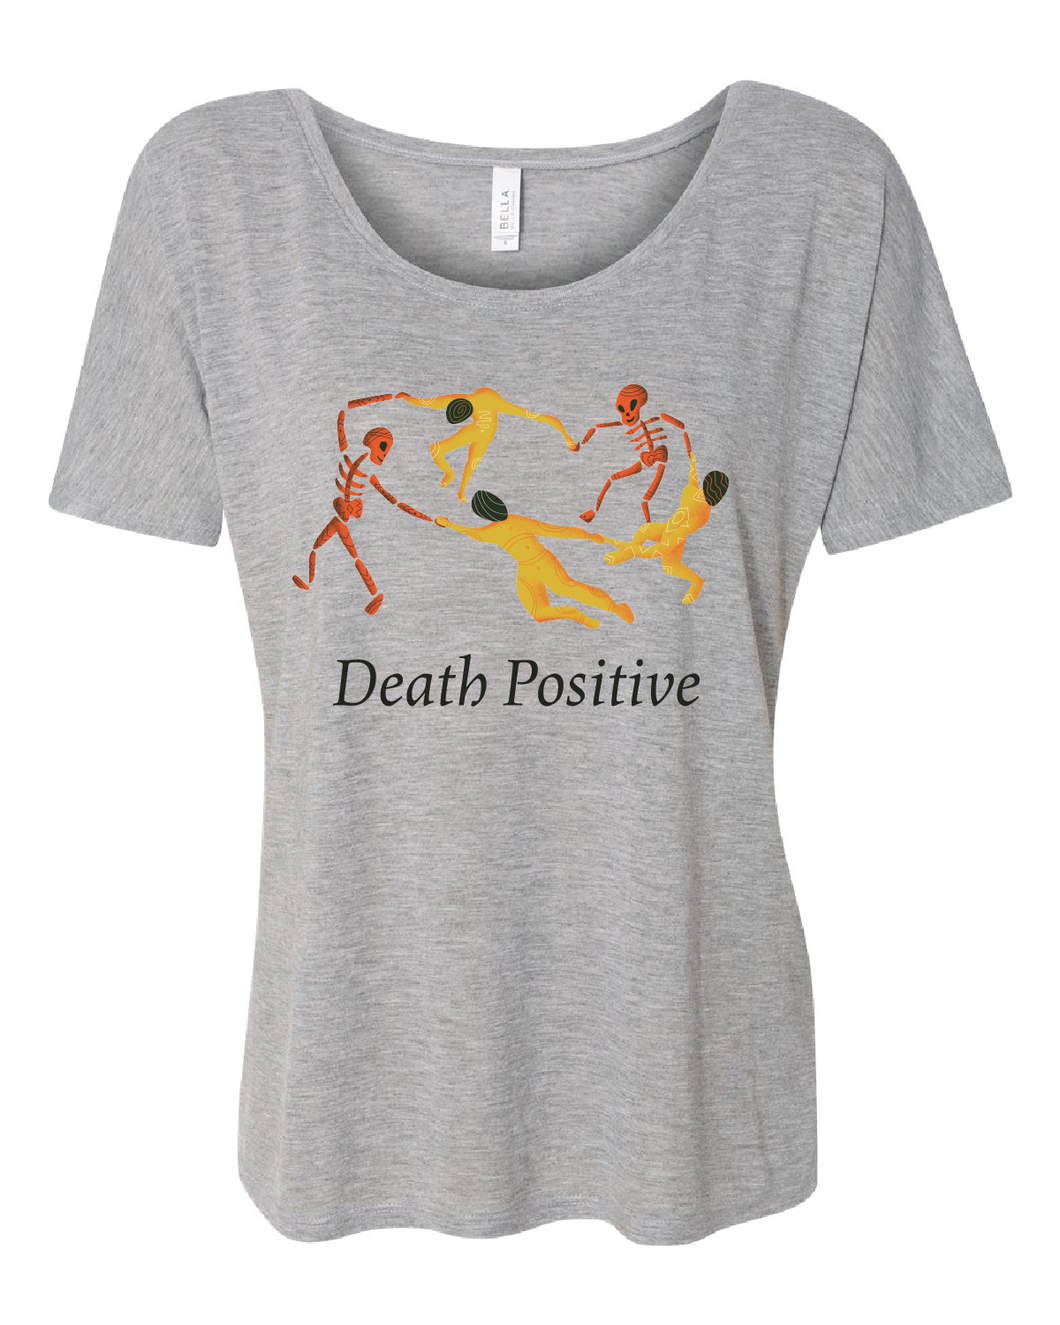 Dancing Death Positive Slouchy Top